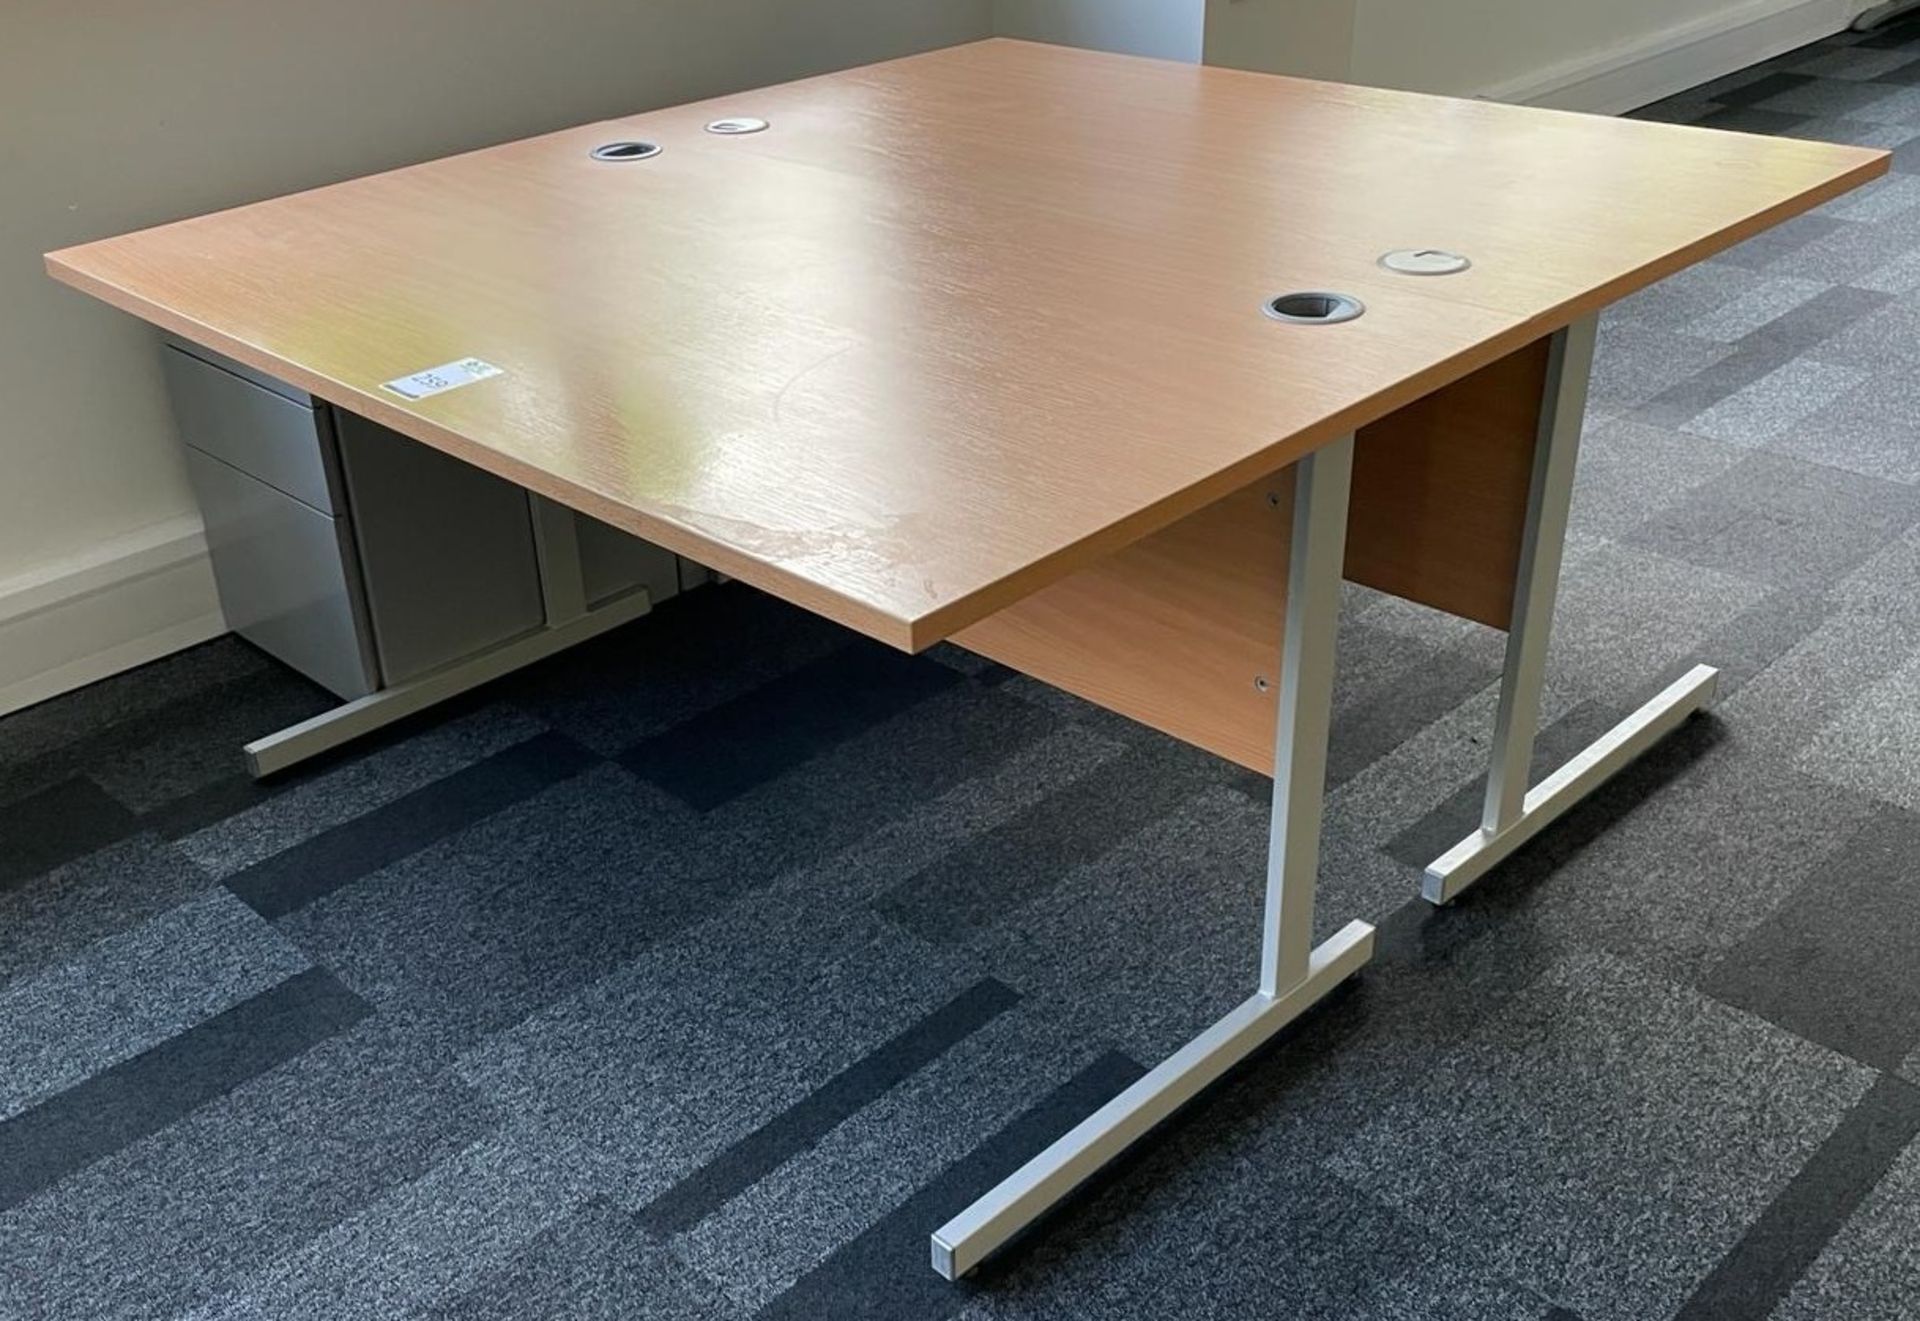 2 Light Oak Effect Desks, Beech Effect Curved Desk & 3 Pedestals, 3-Drawer (Located Rugby. Please